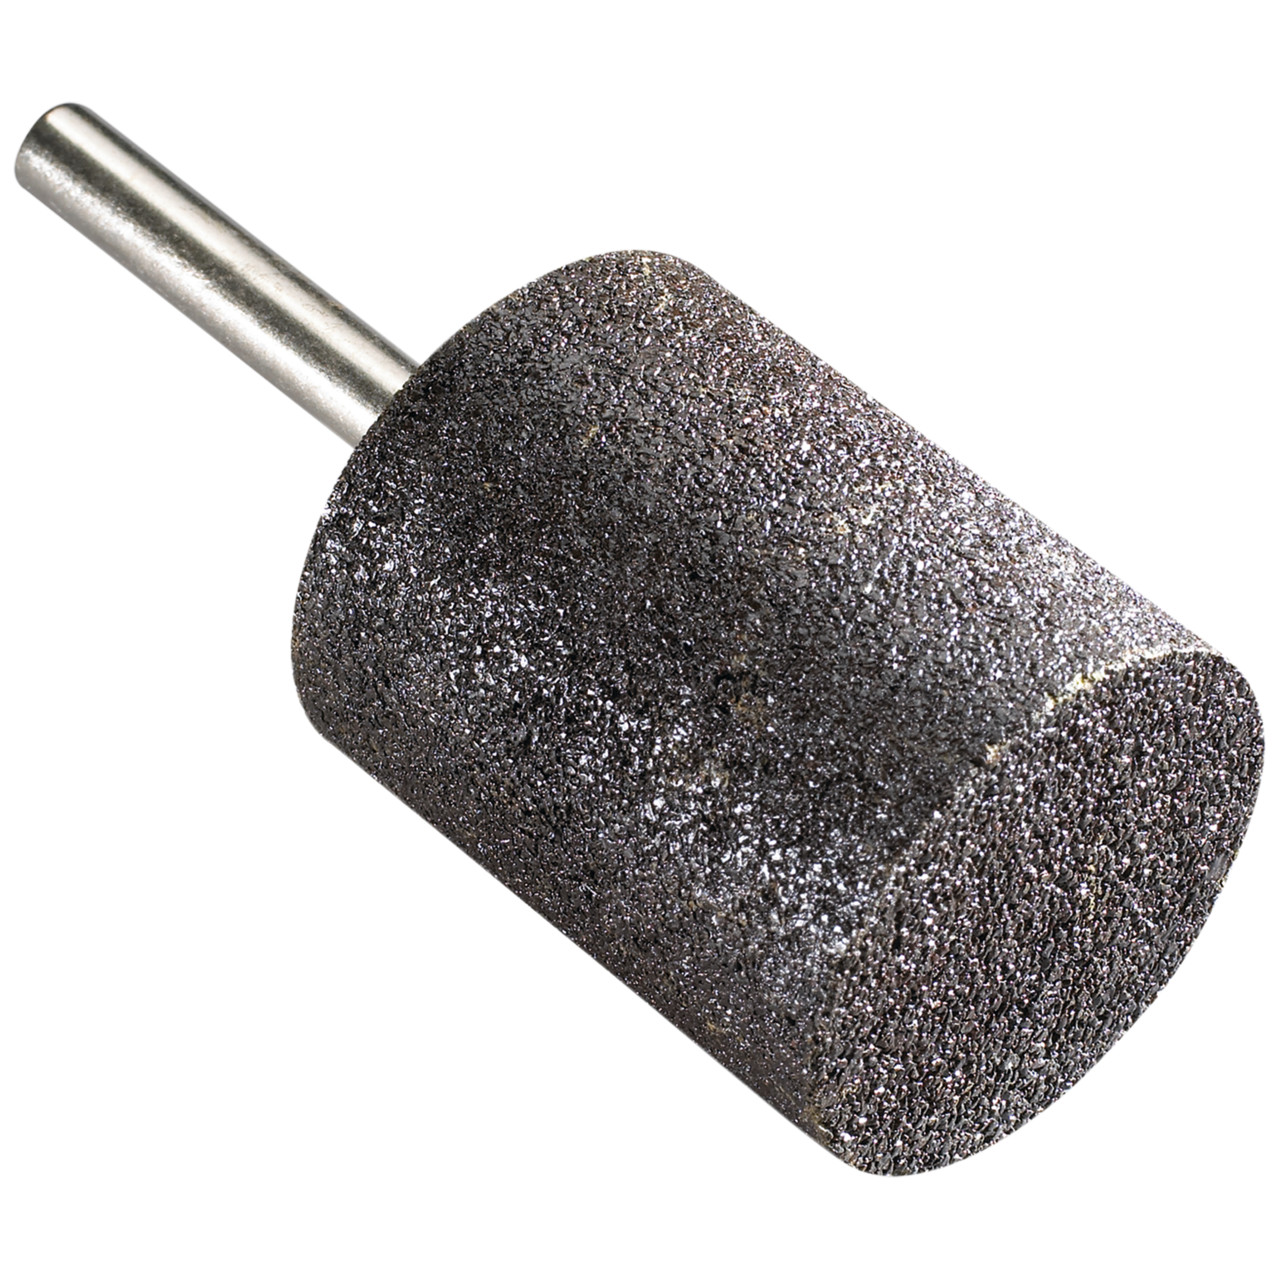 Punti montati in resina Tyrolit DxT-SxL 25x13-6x40 Per acciaio inox, forma: 52ZY - cilindro (punto montato), Art. 34053929